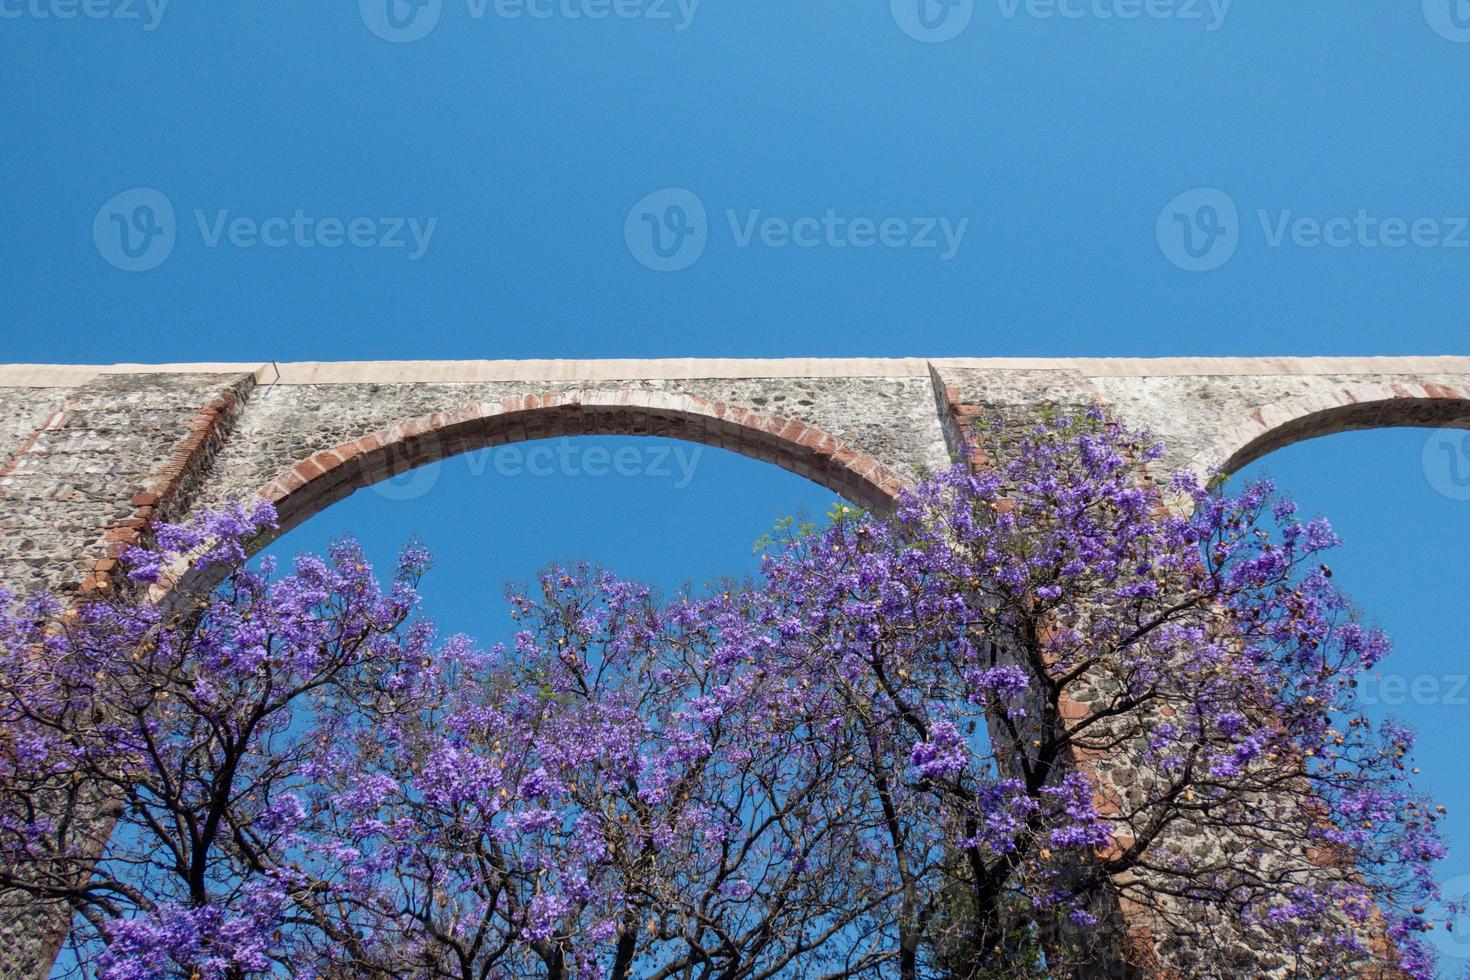 Queretaro Mexico aqueduct with jacaranda tree and purple flowers photo